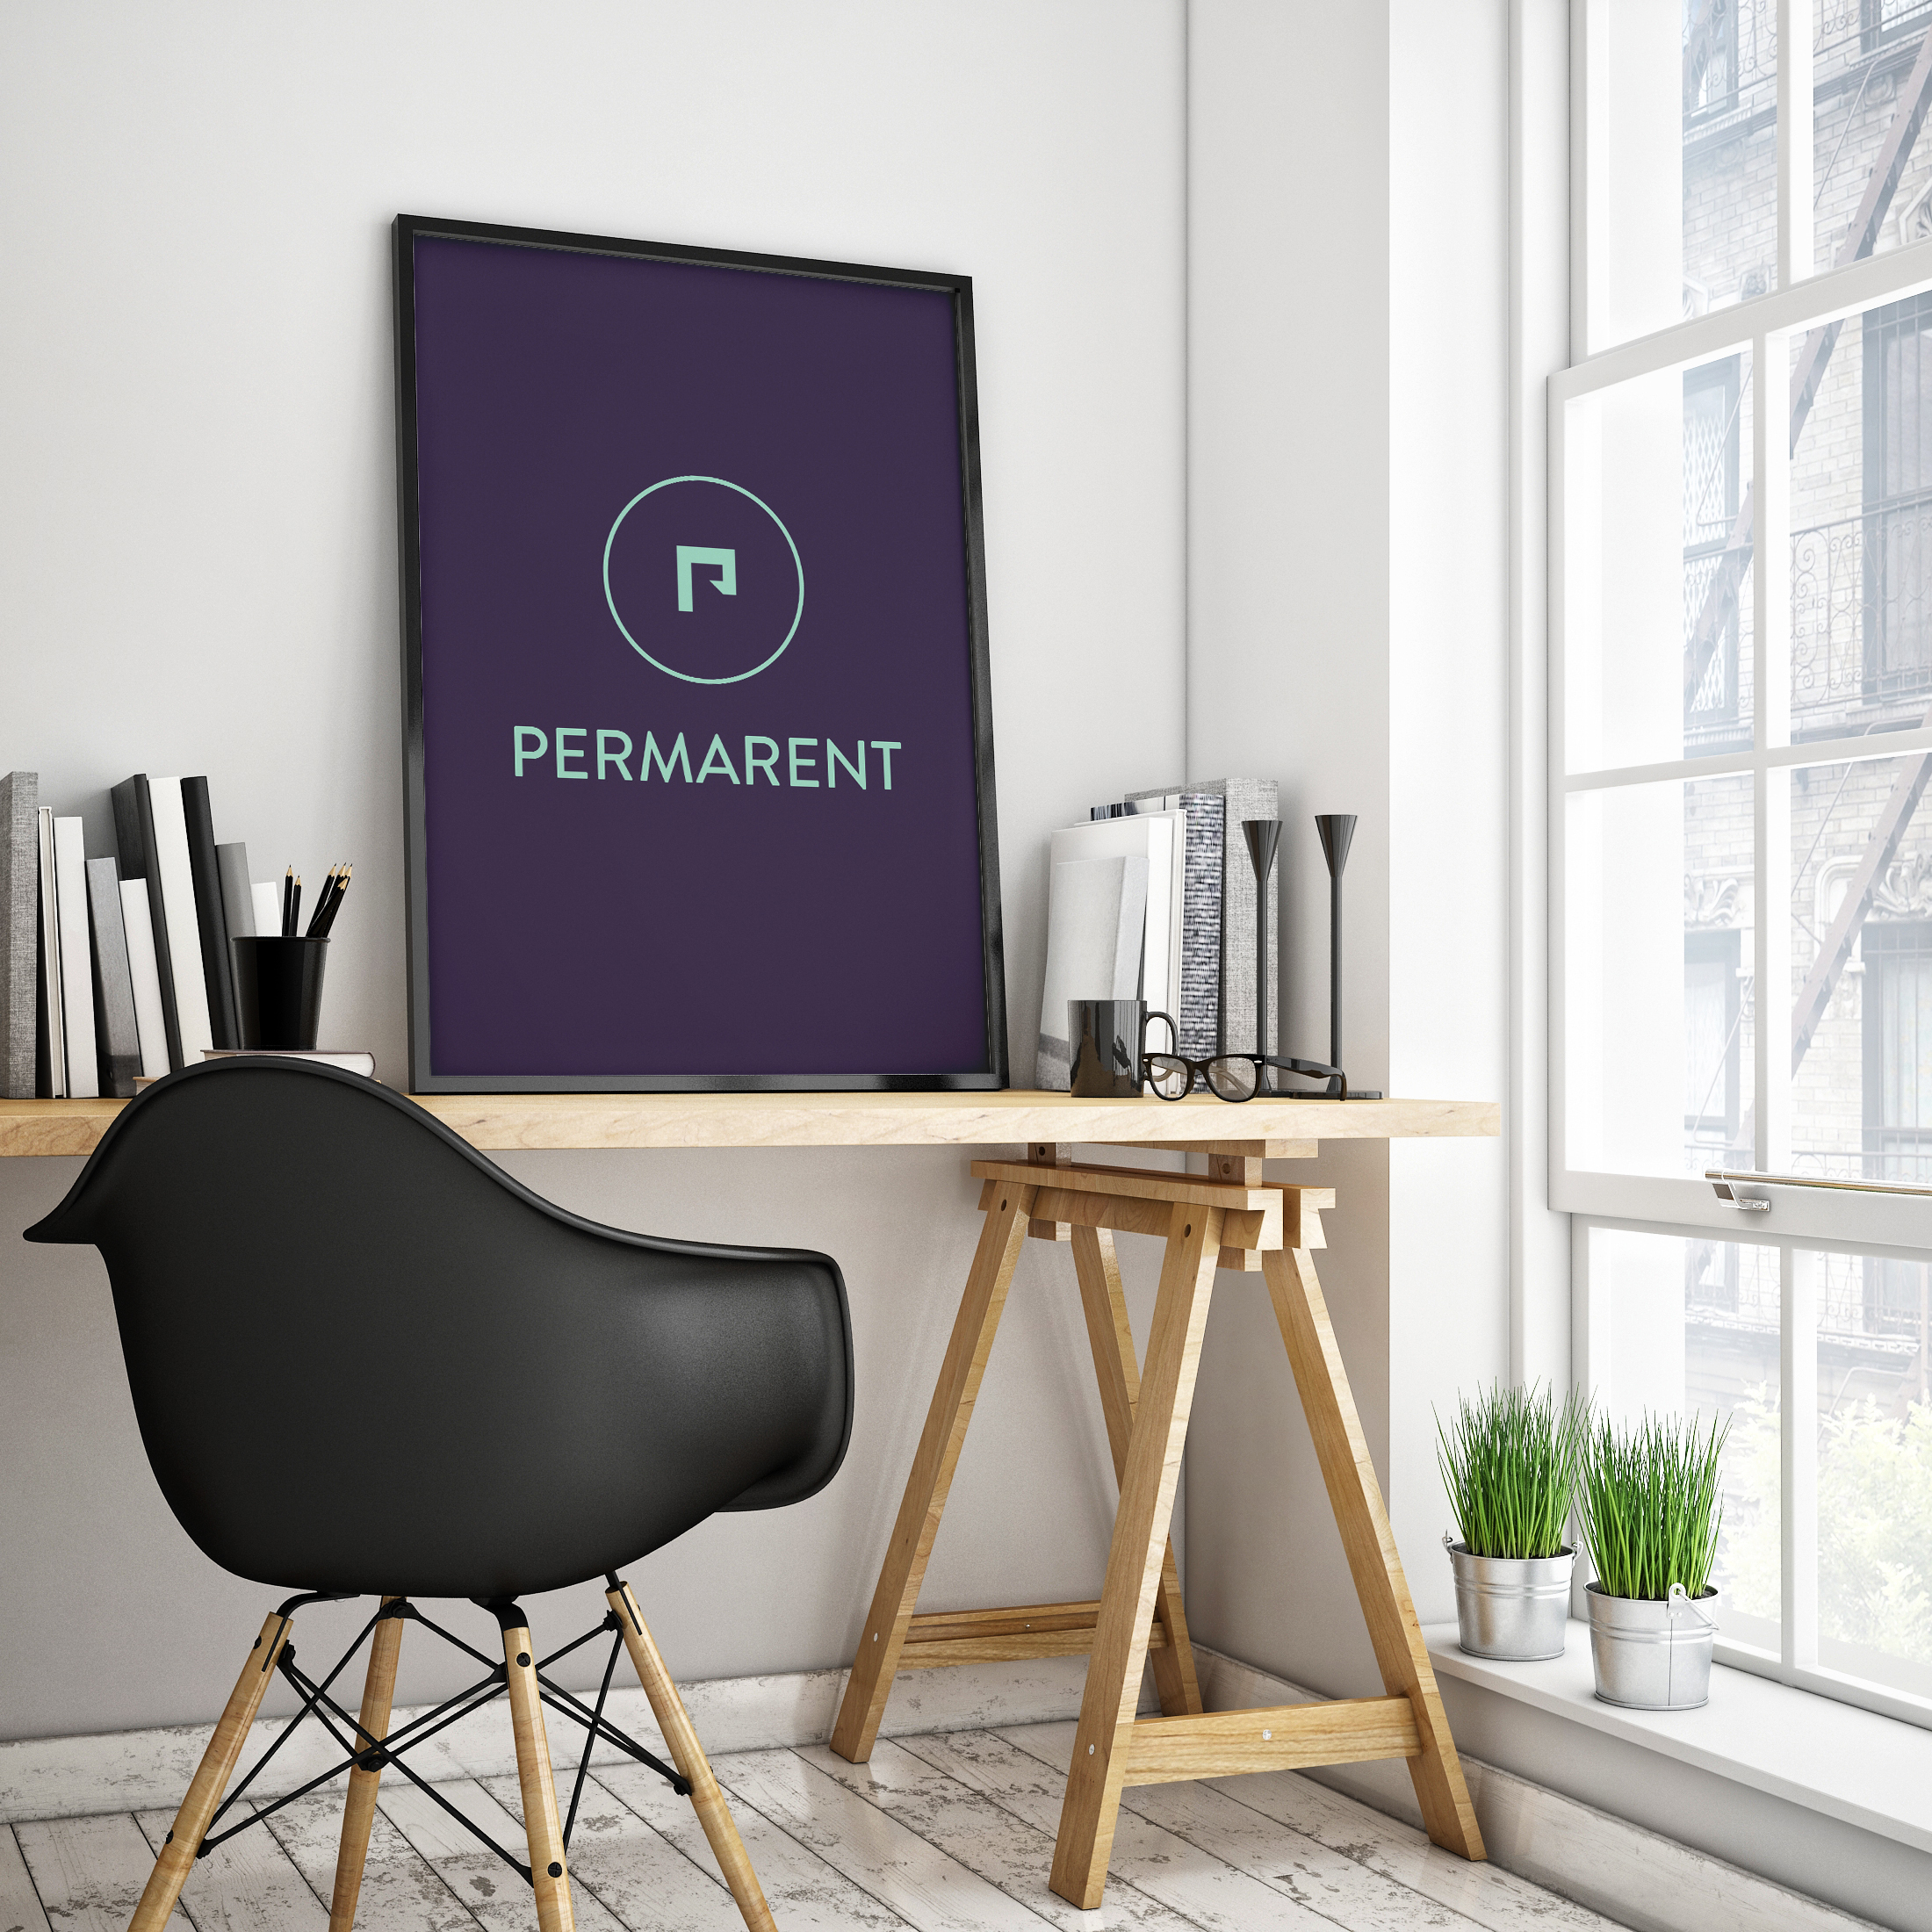 Permarent- An Online Marketplace